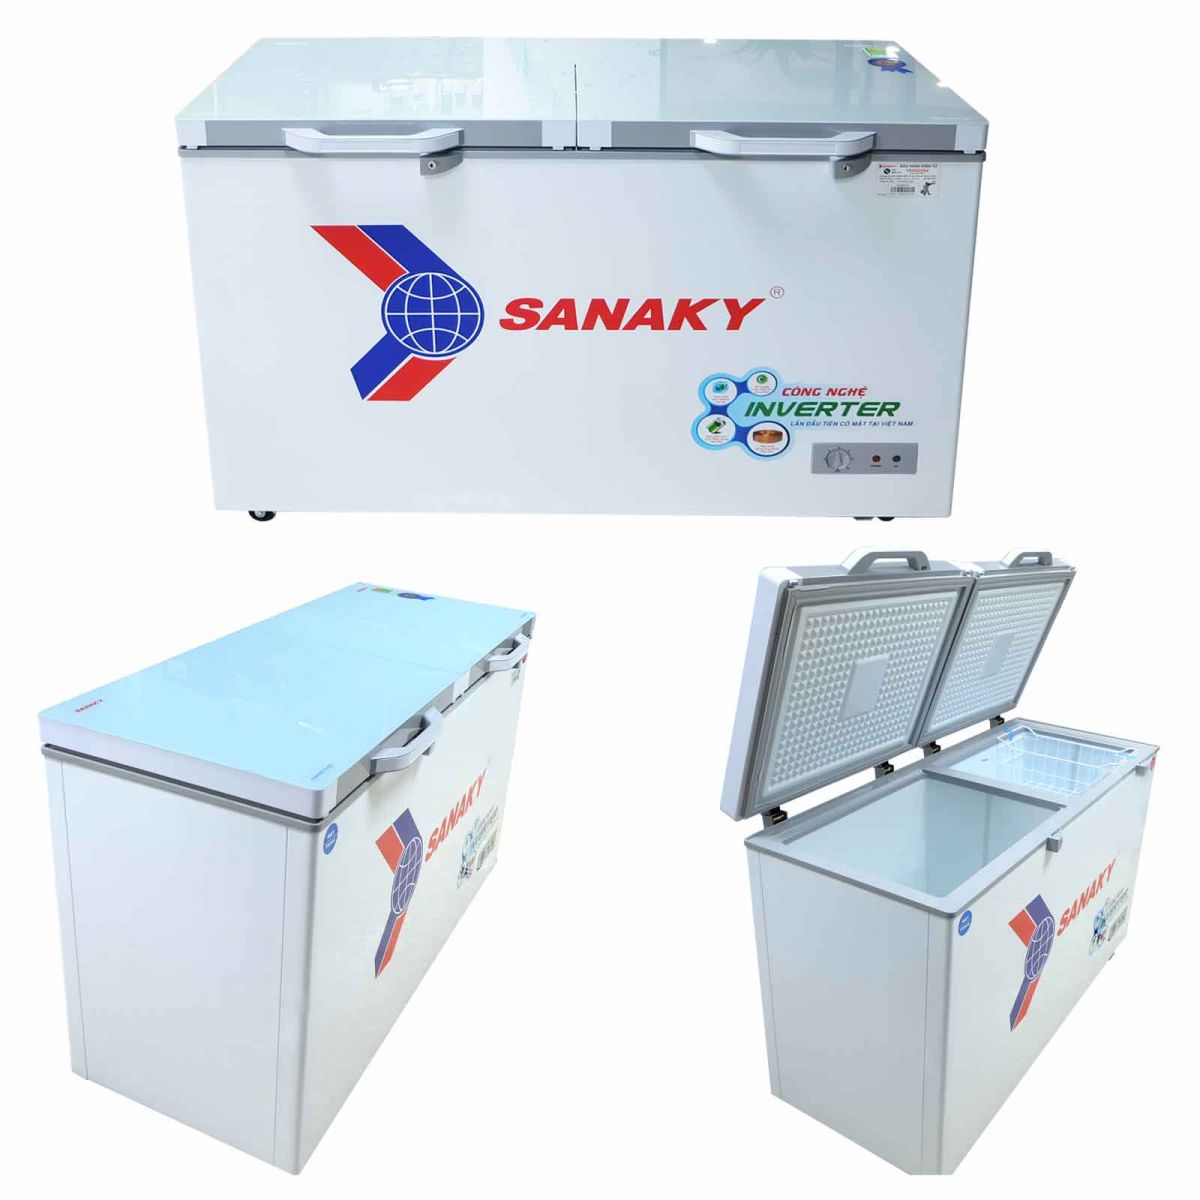 Tủ đông Sanaky Inverter 260L VH-3699W4K